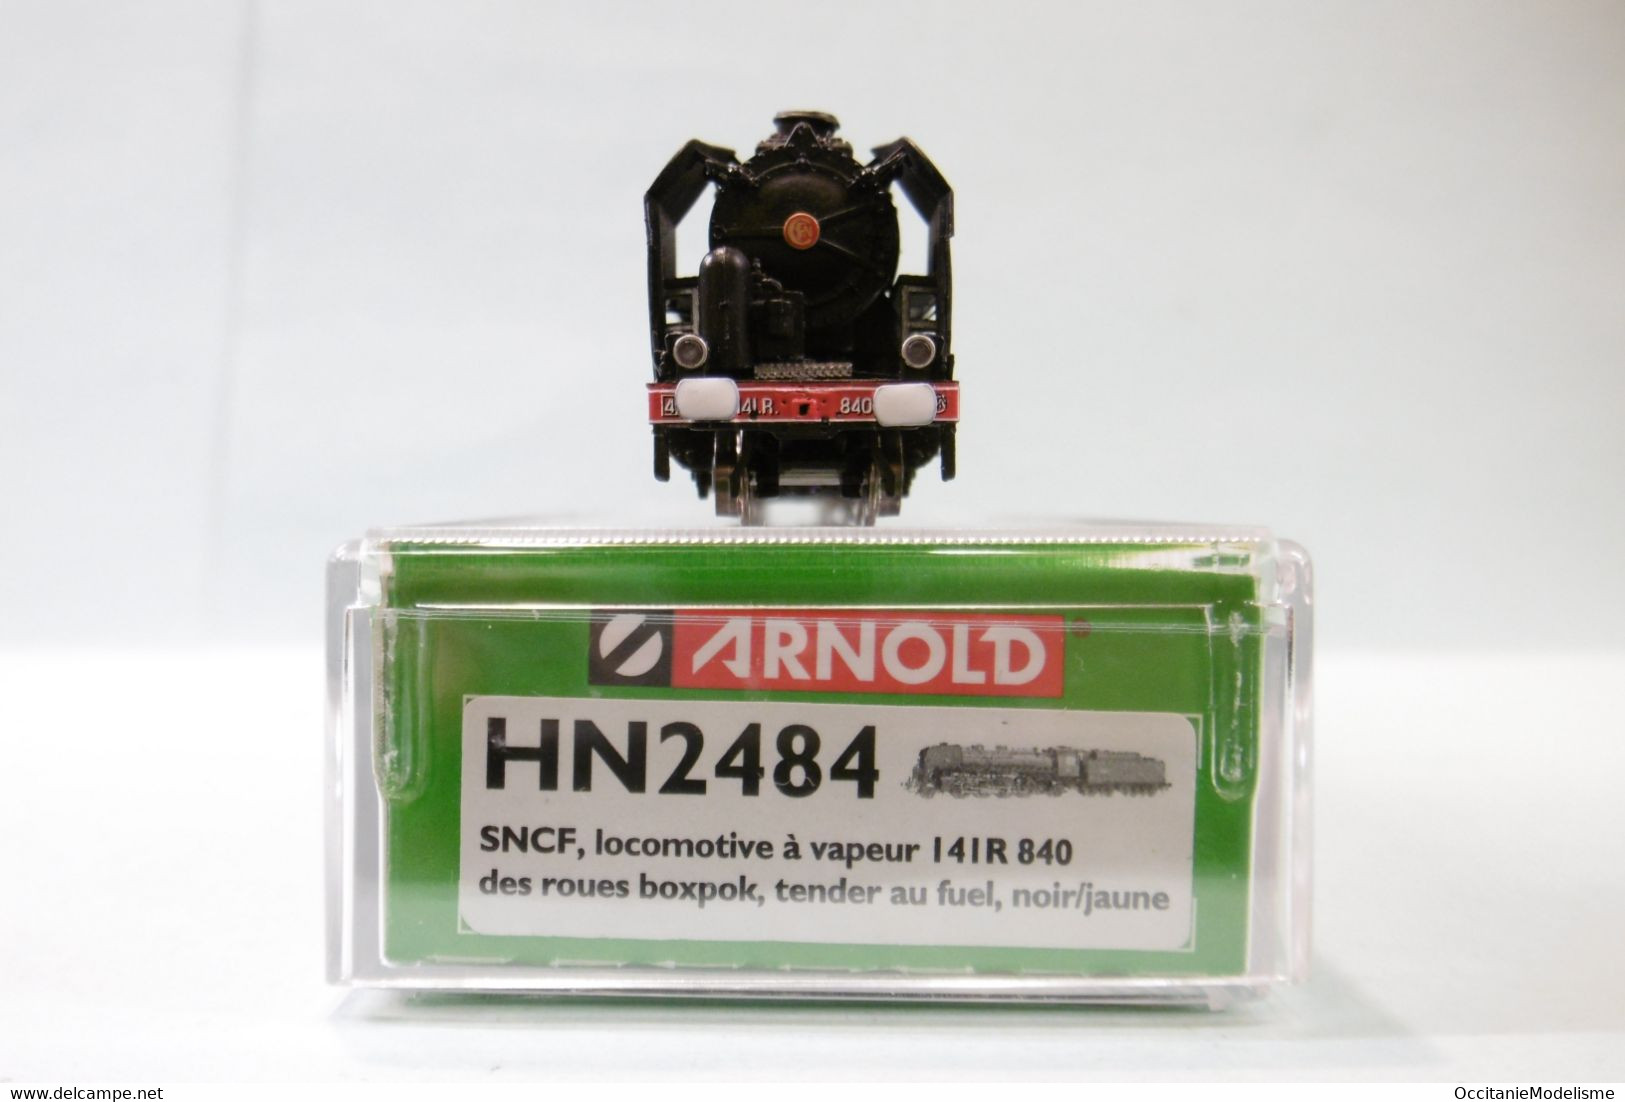 Arnold - Locomotive vapeur 141 R 840 Fuel noir SNCF réf. HN2484 Neuf NBO N 1/160